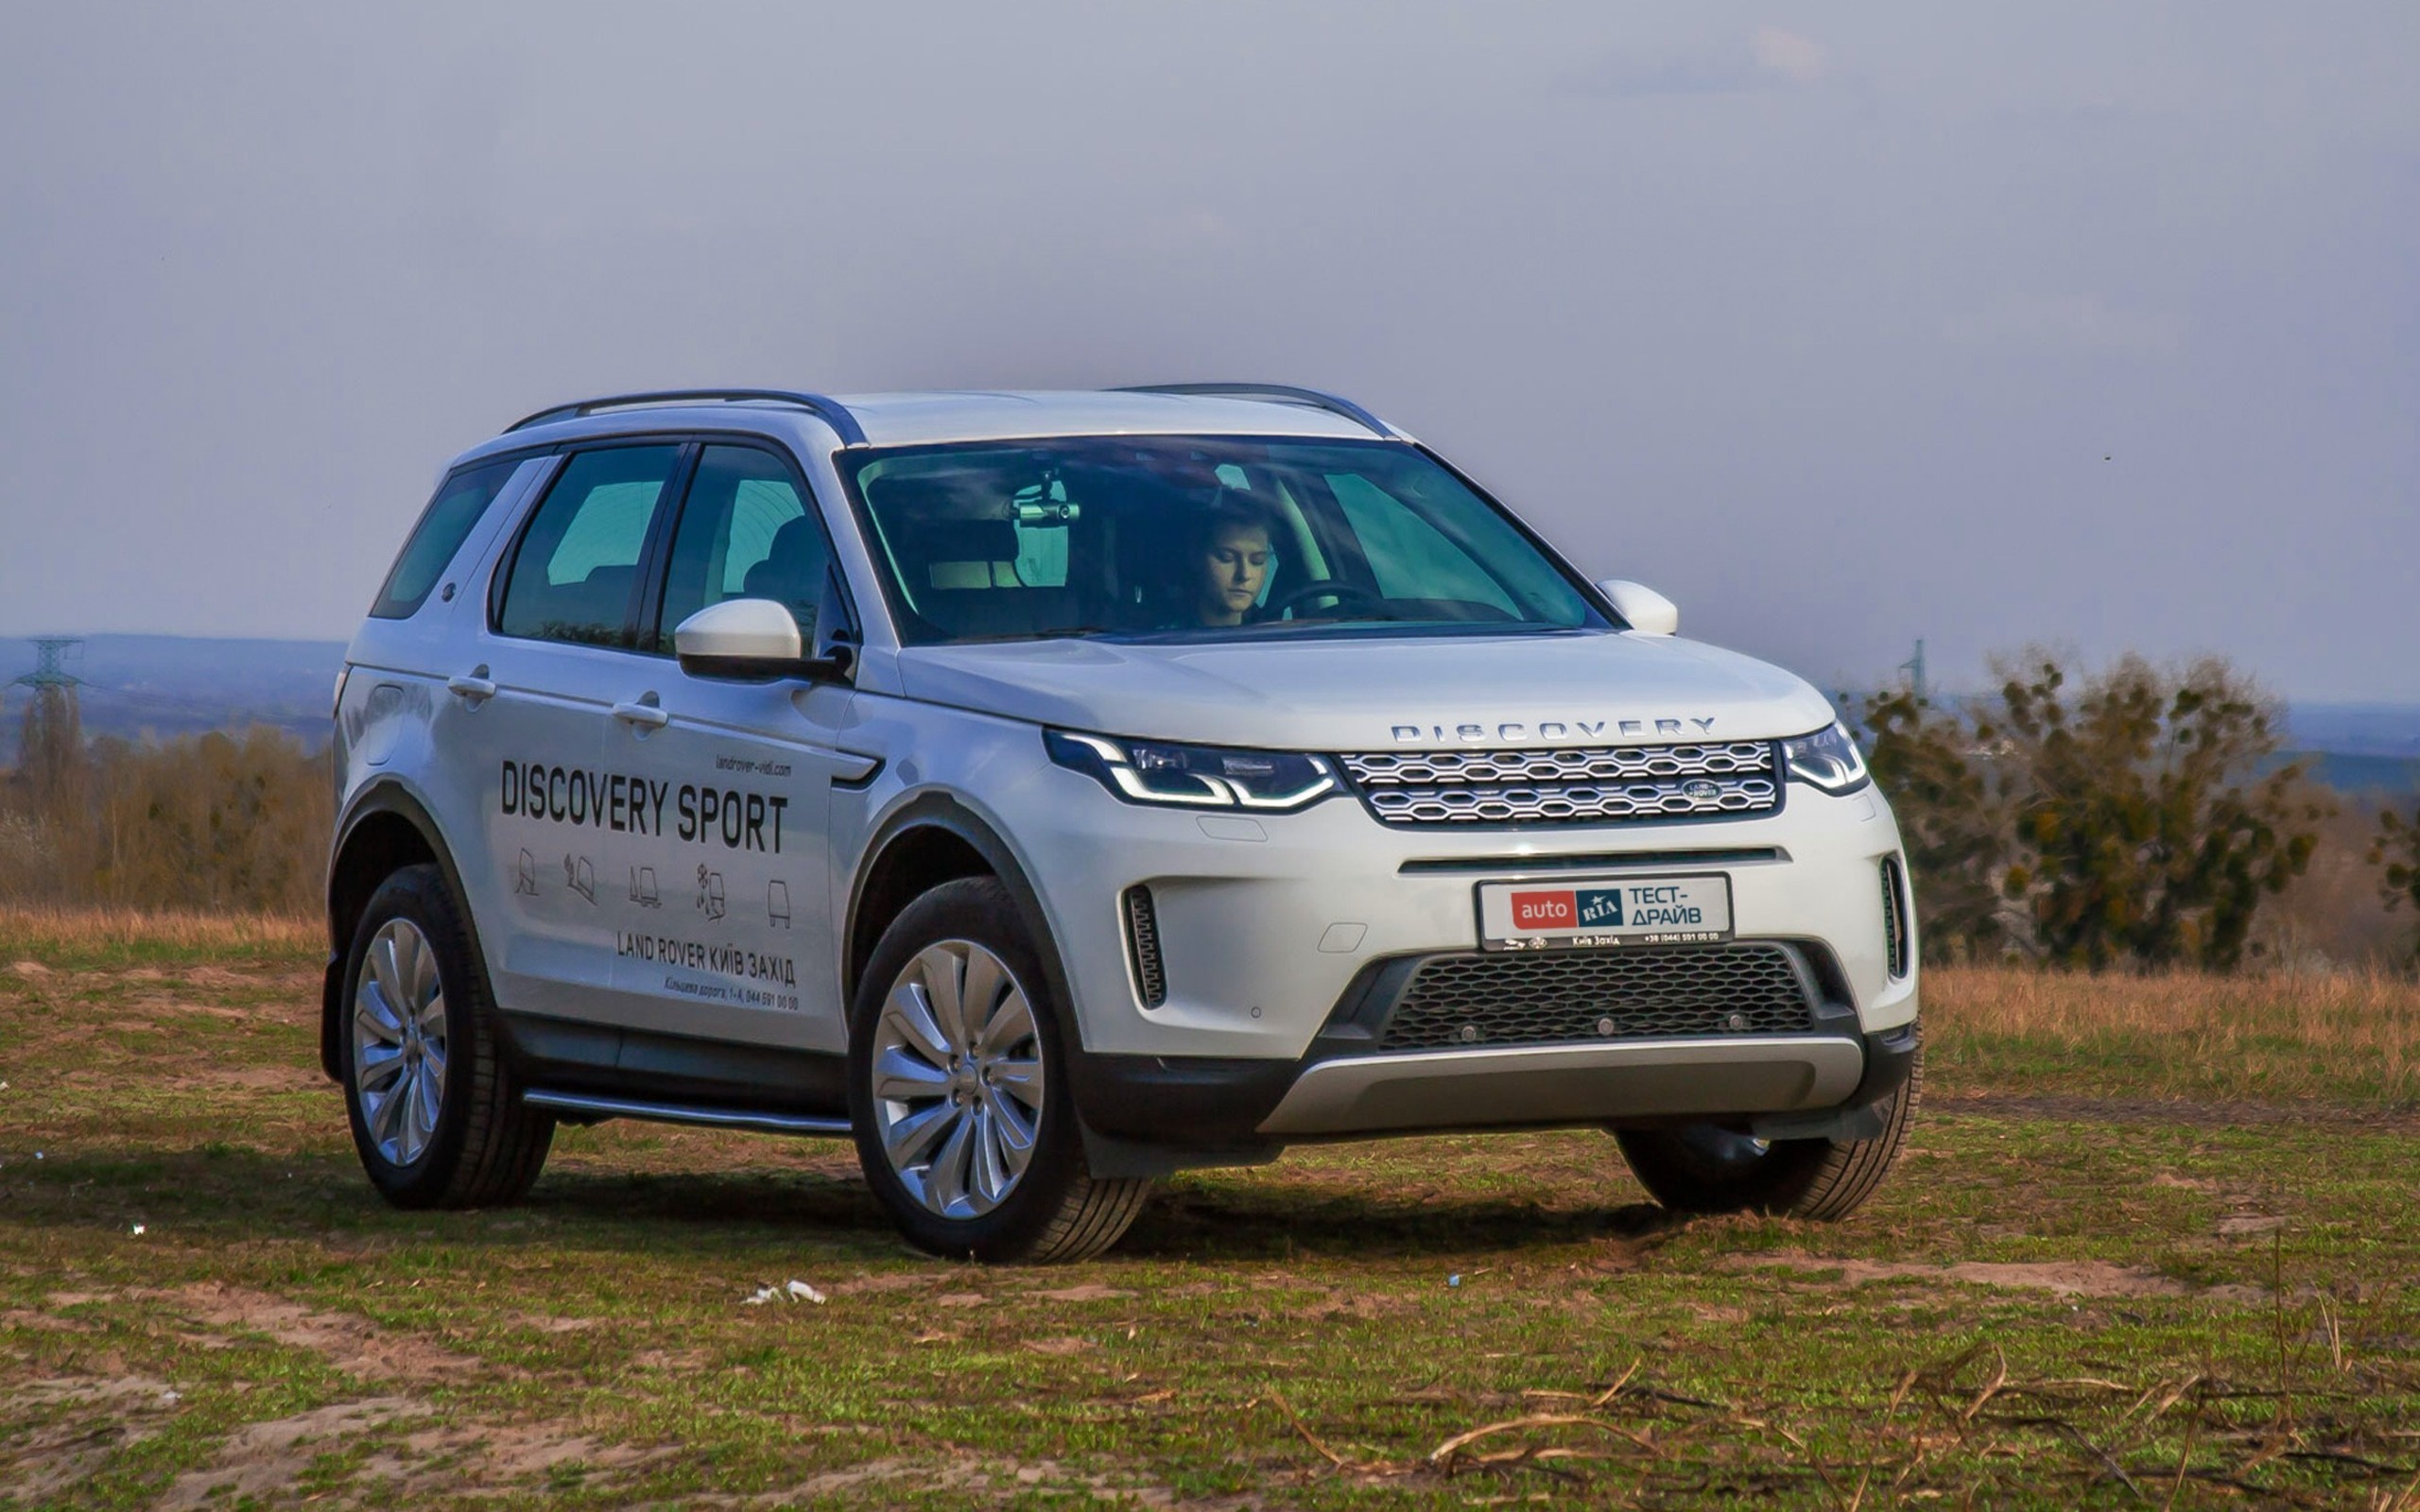 Land Rover Discovery Sport › ටෙස්ට් ධාවකය